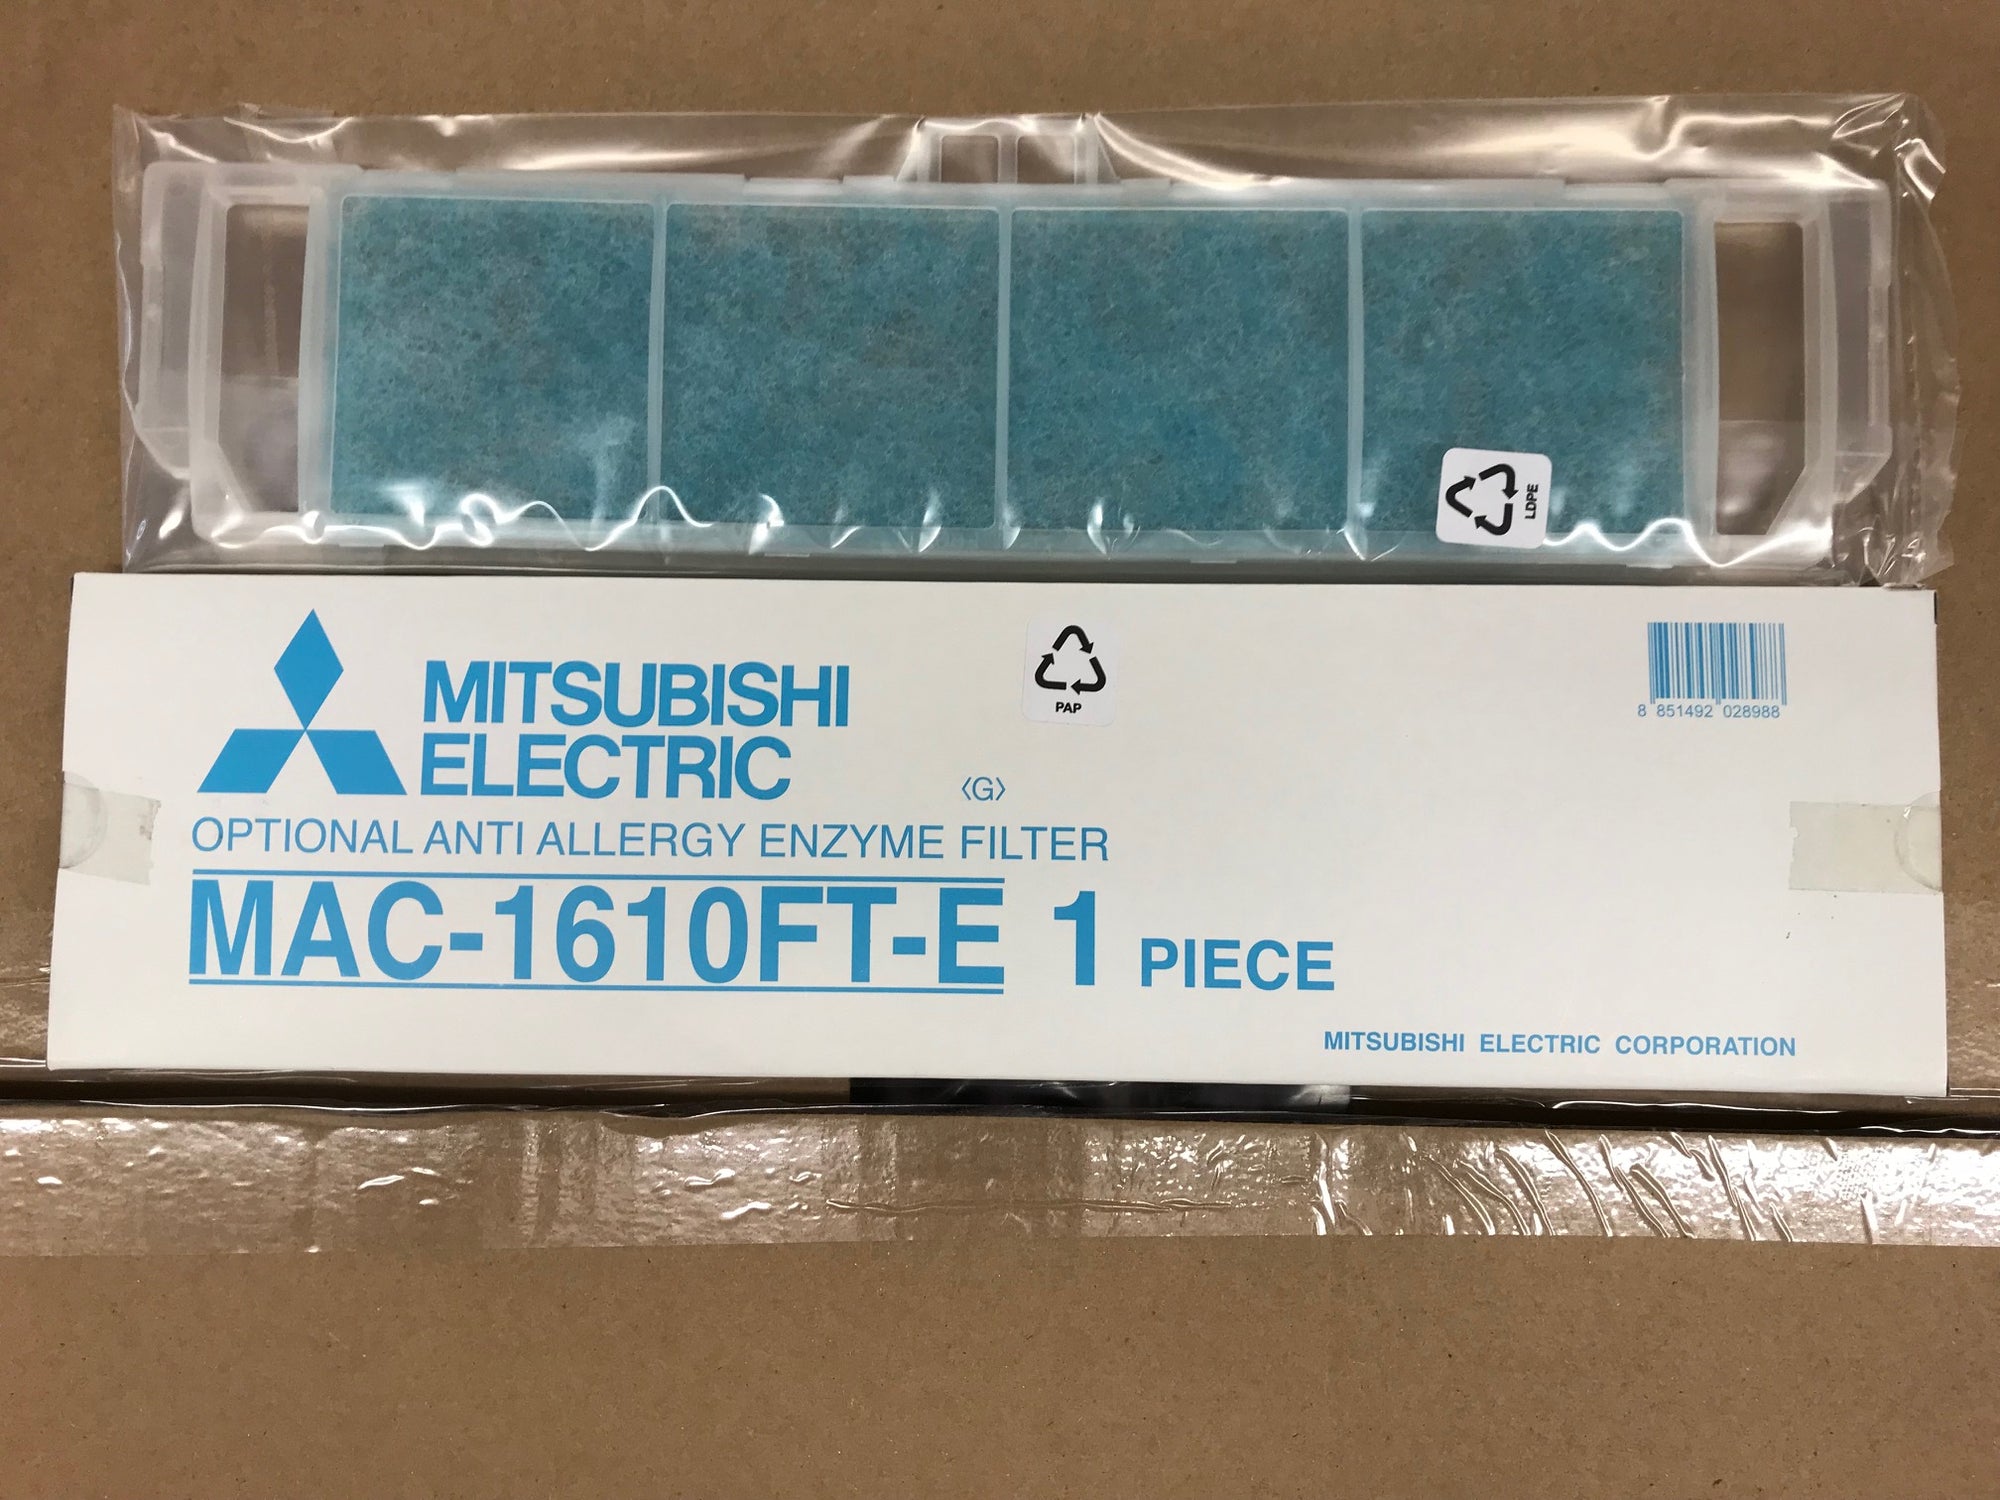 Mitsubishi MAC-1610FT-E Mini Split Enzyme Enhanced Filter